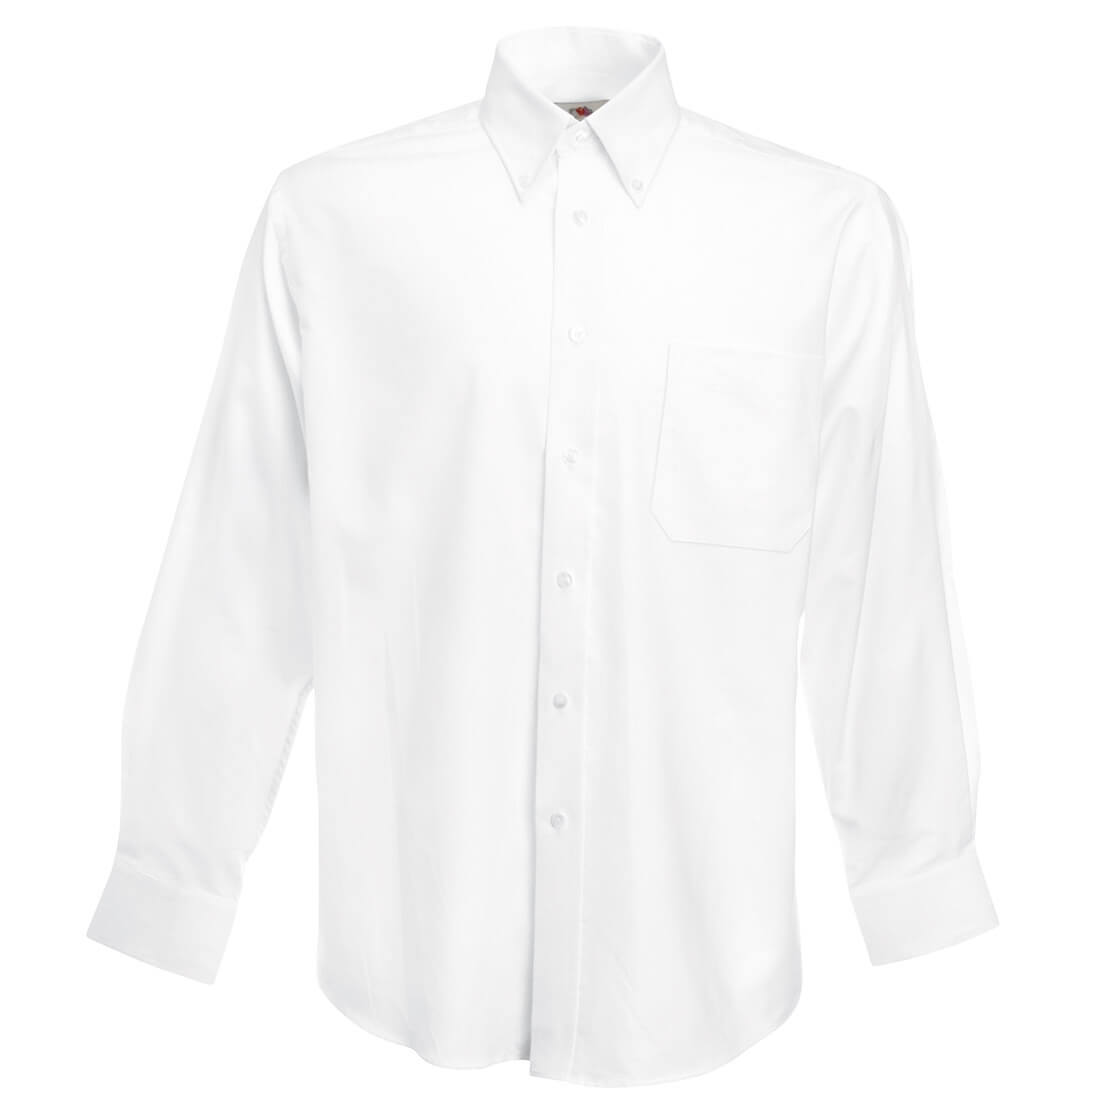 Long Sleeve Oxford Shirt - Safetywear